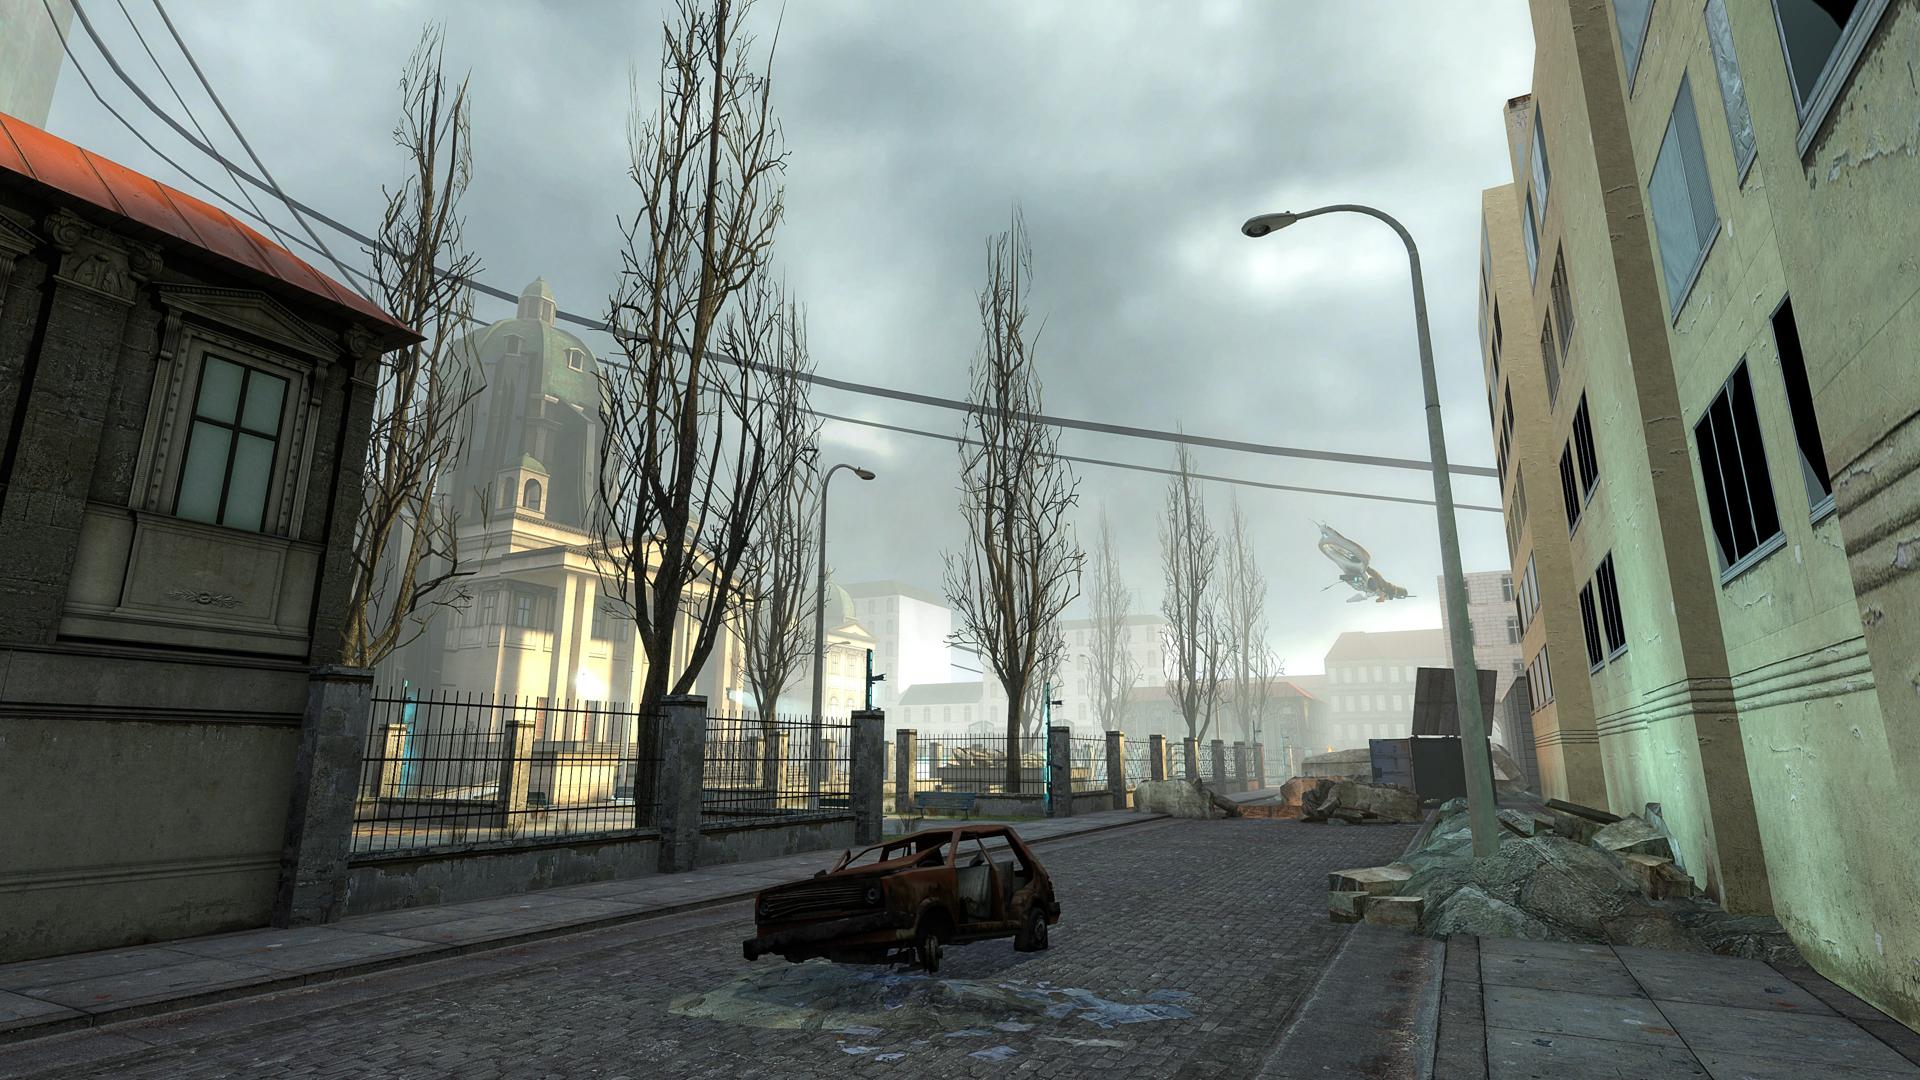 Screenshot №11 from game Half-Life 2: Update